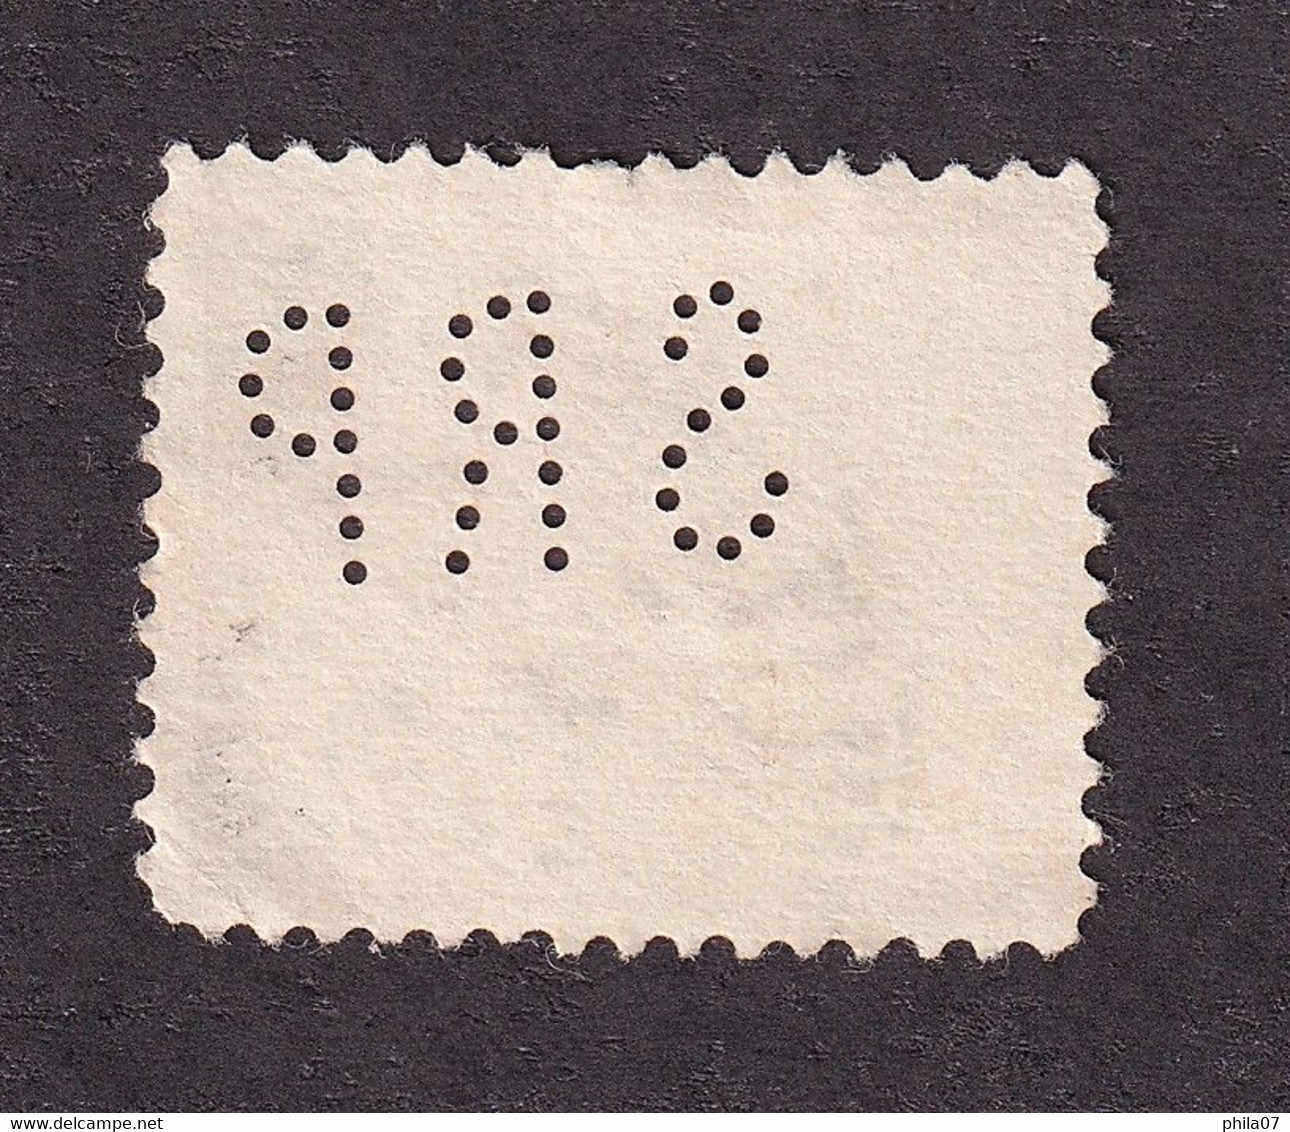 Bosnia And Herzegovina - Stamp 20 Hellera, Coat Of Arms, Perforation SRP (Schmarda, Rotter & Perschitz) - Bosnië En Herzegovina